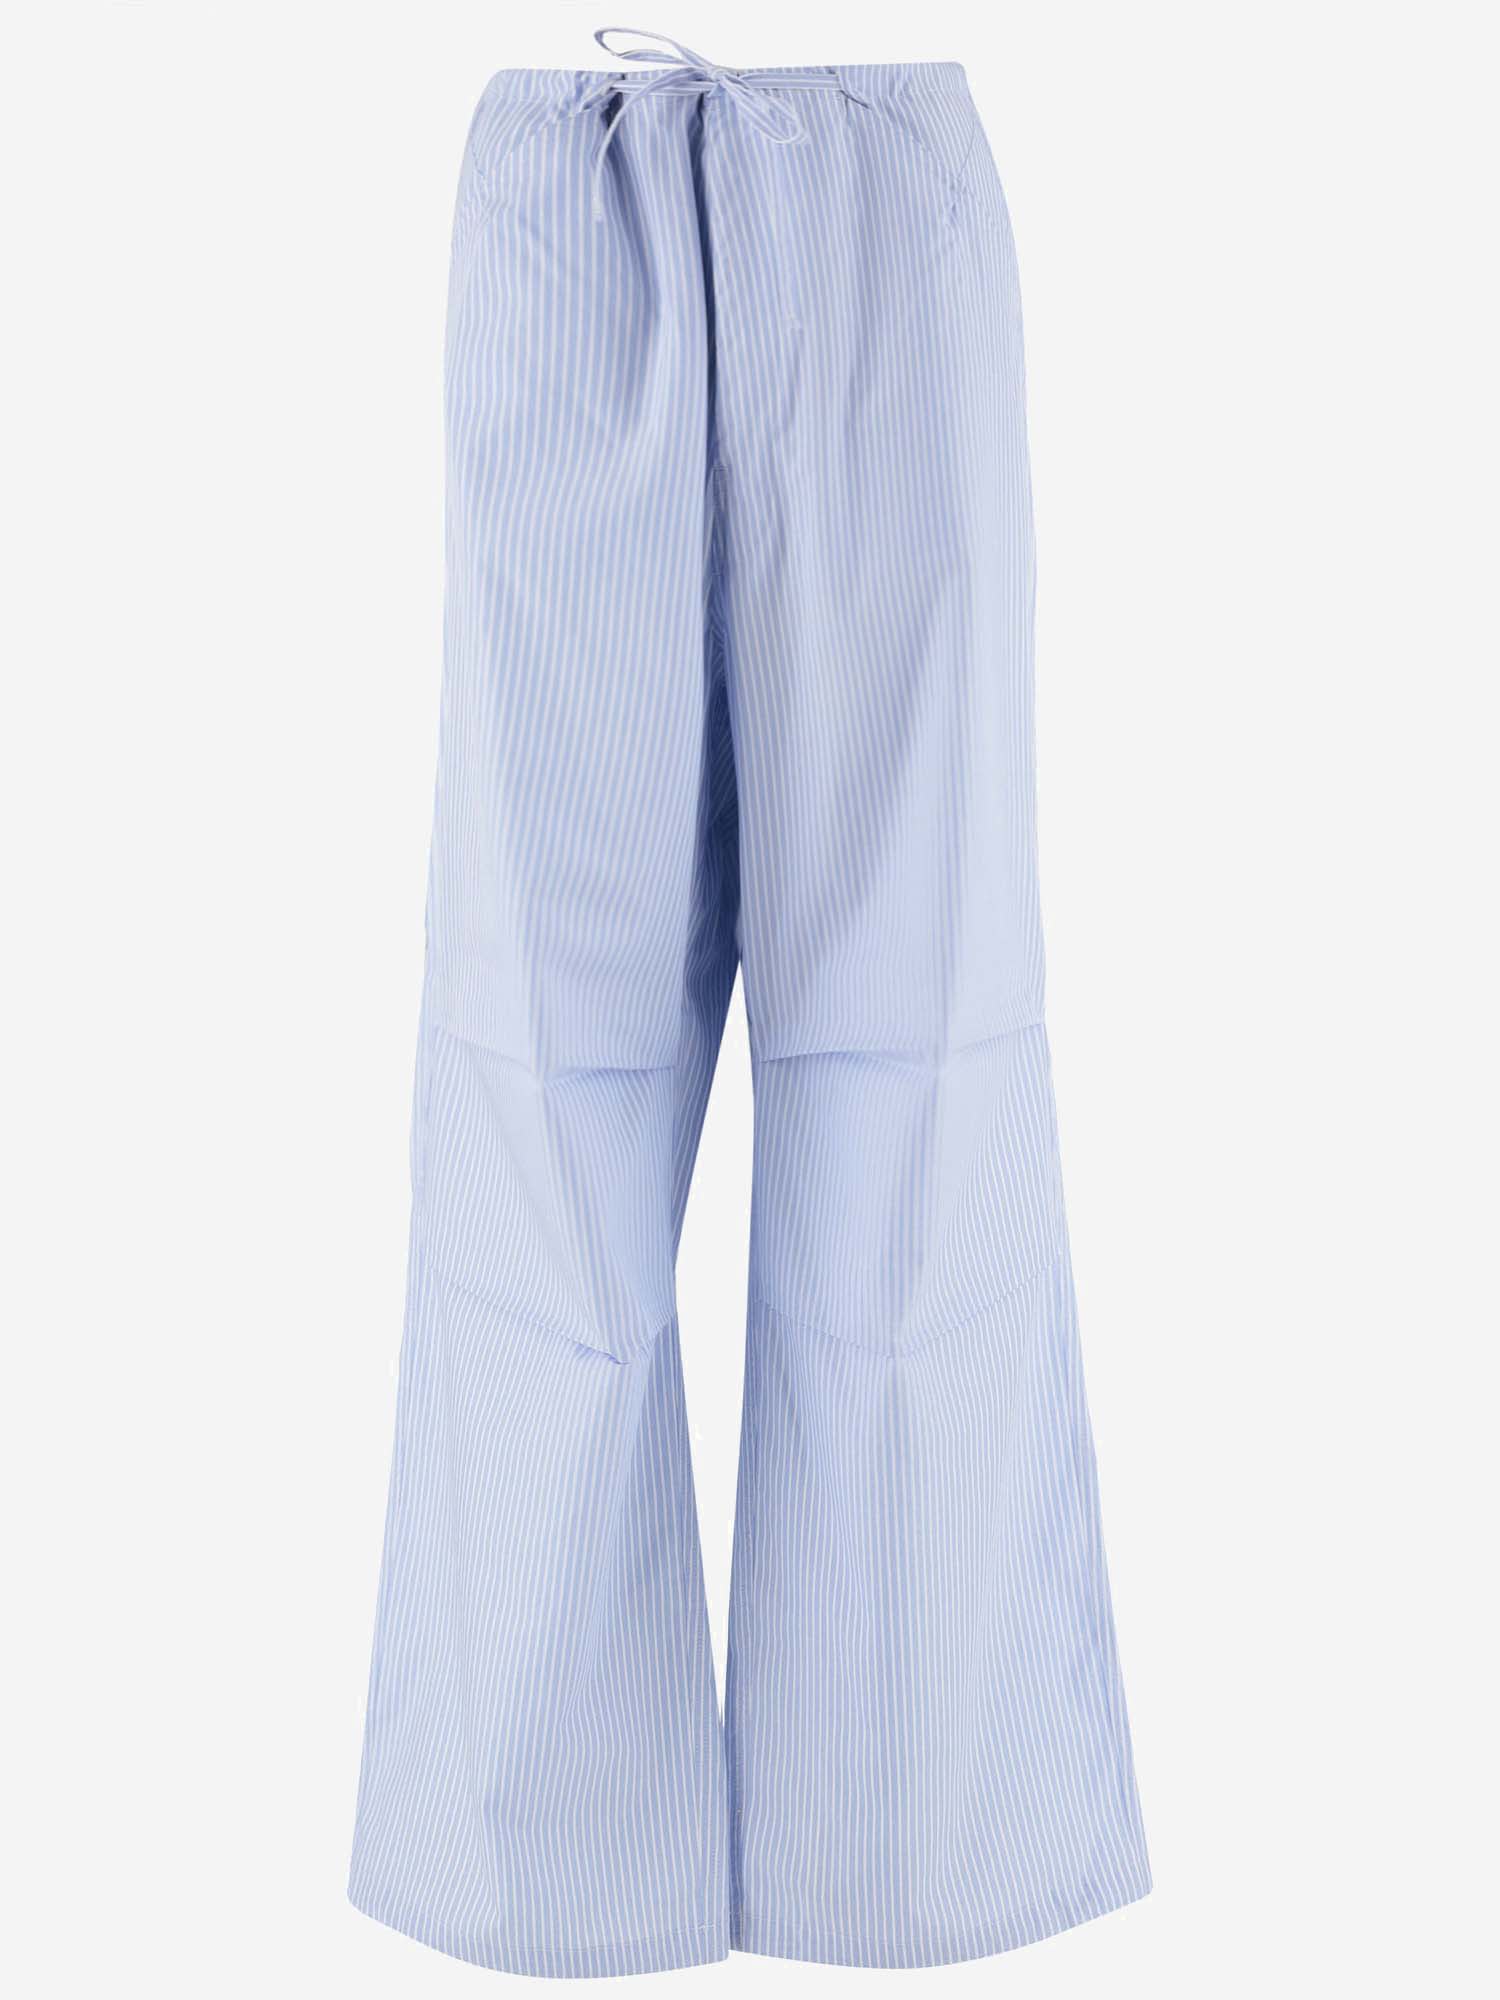 Shop Darkpark Striped Cotton Pants In Light Blue/white